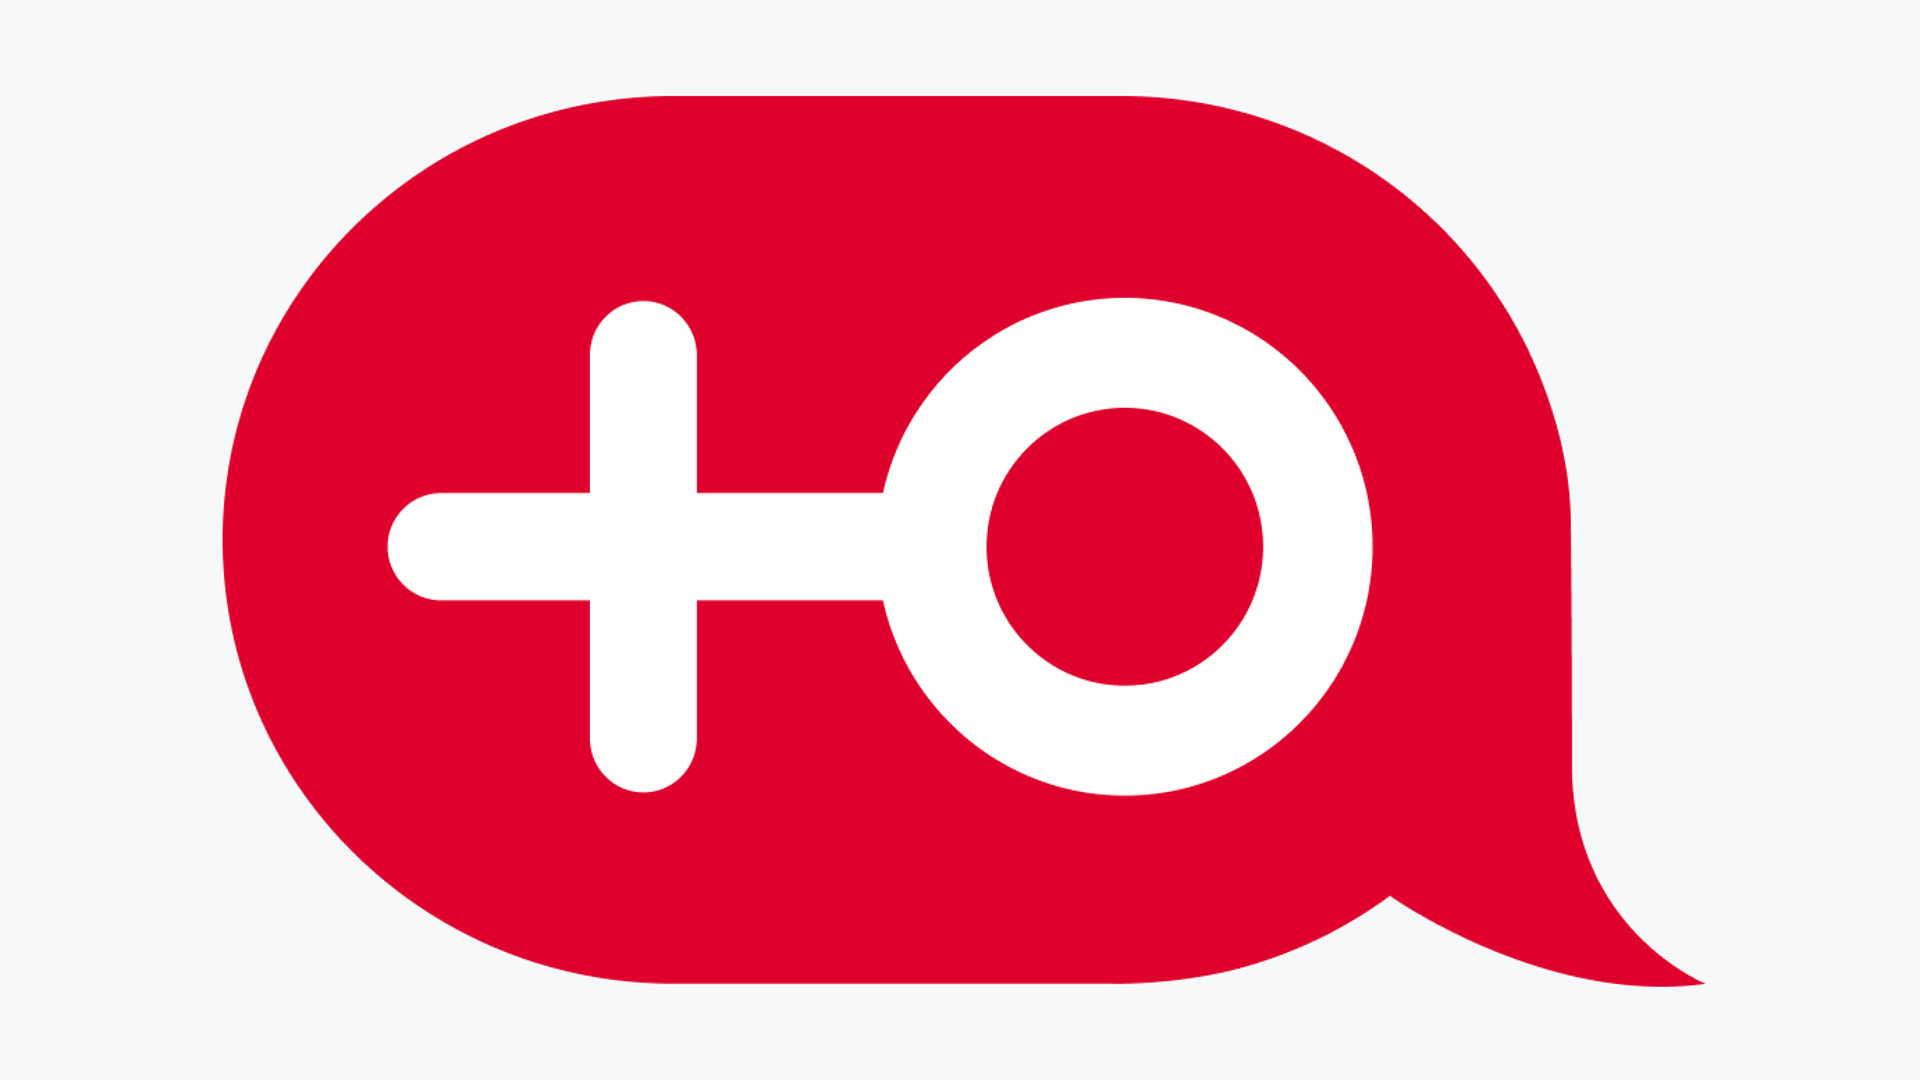 Канал ю. Значок канала ю. ЮТВ логотип. Логотип телеканала ю ТВ.